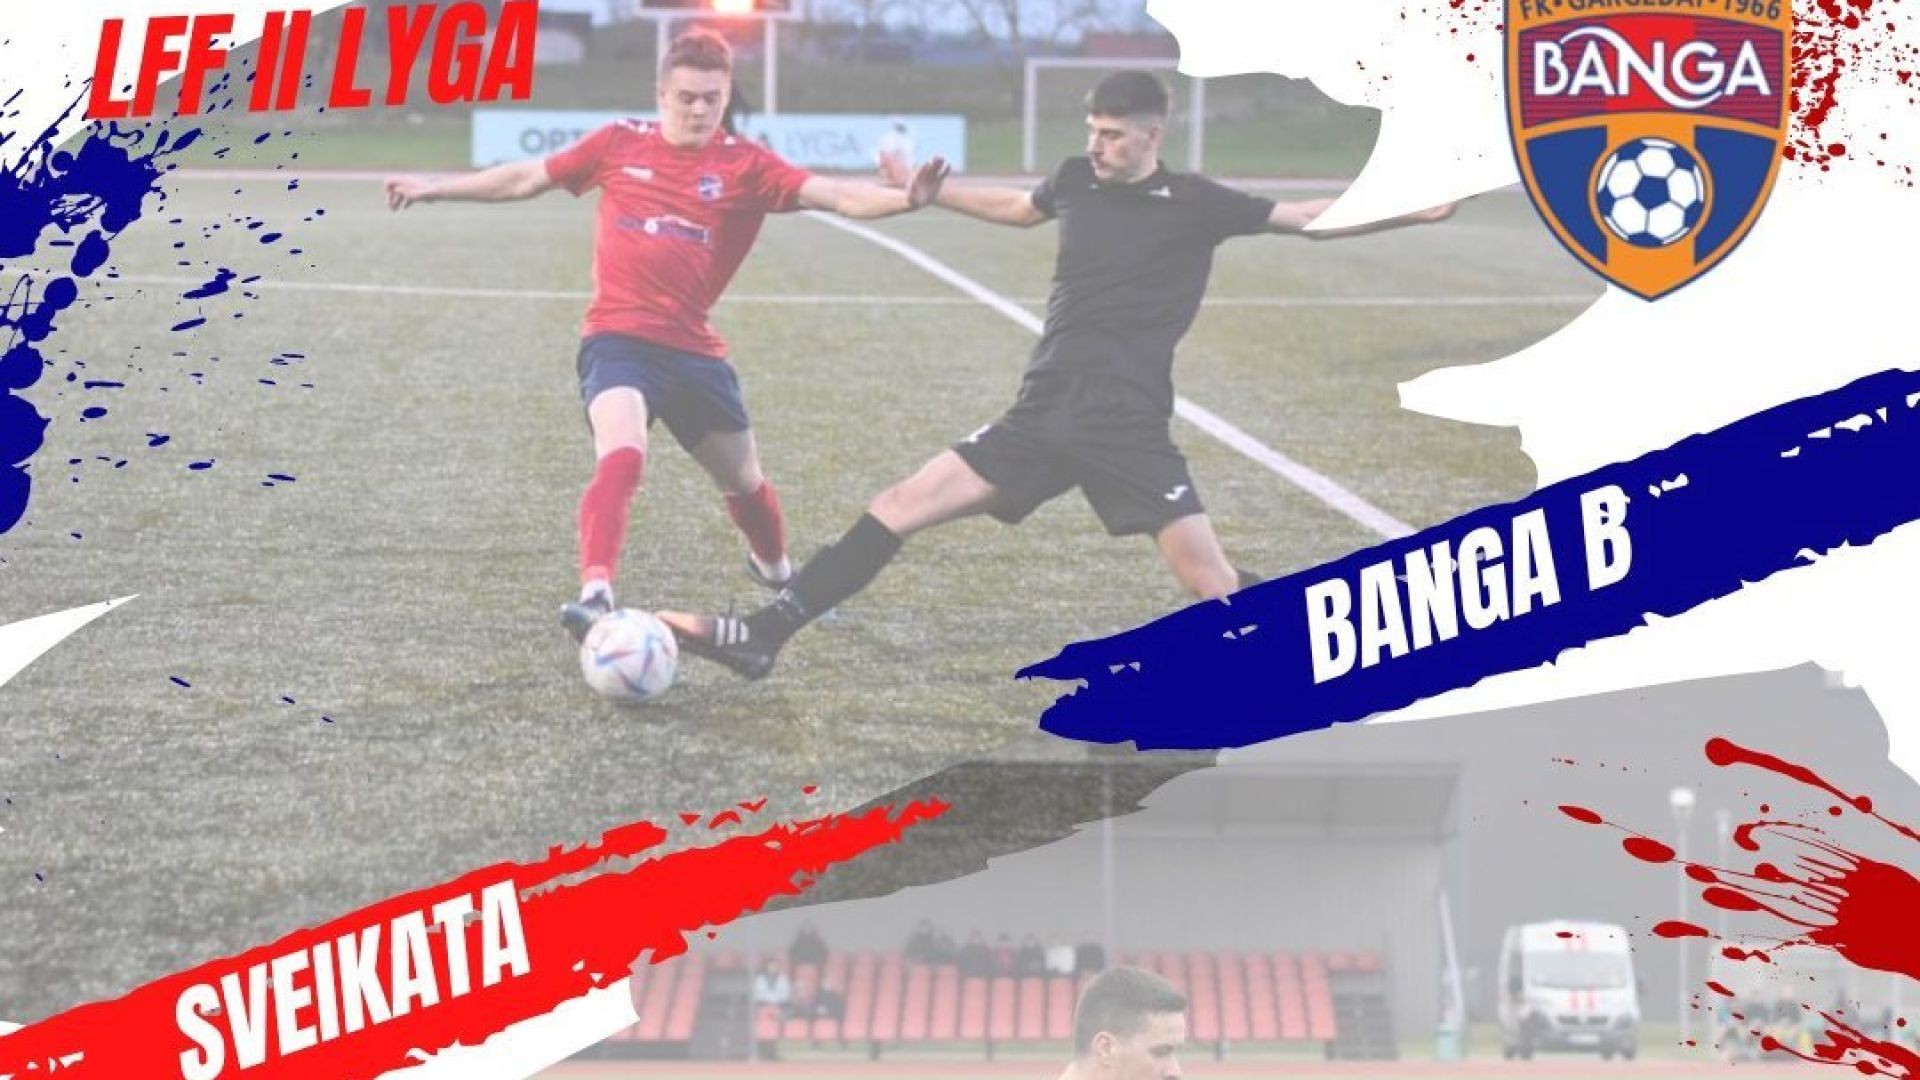 LFF 2 LYGA: SVEIKATA - FK BANGA B